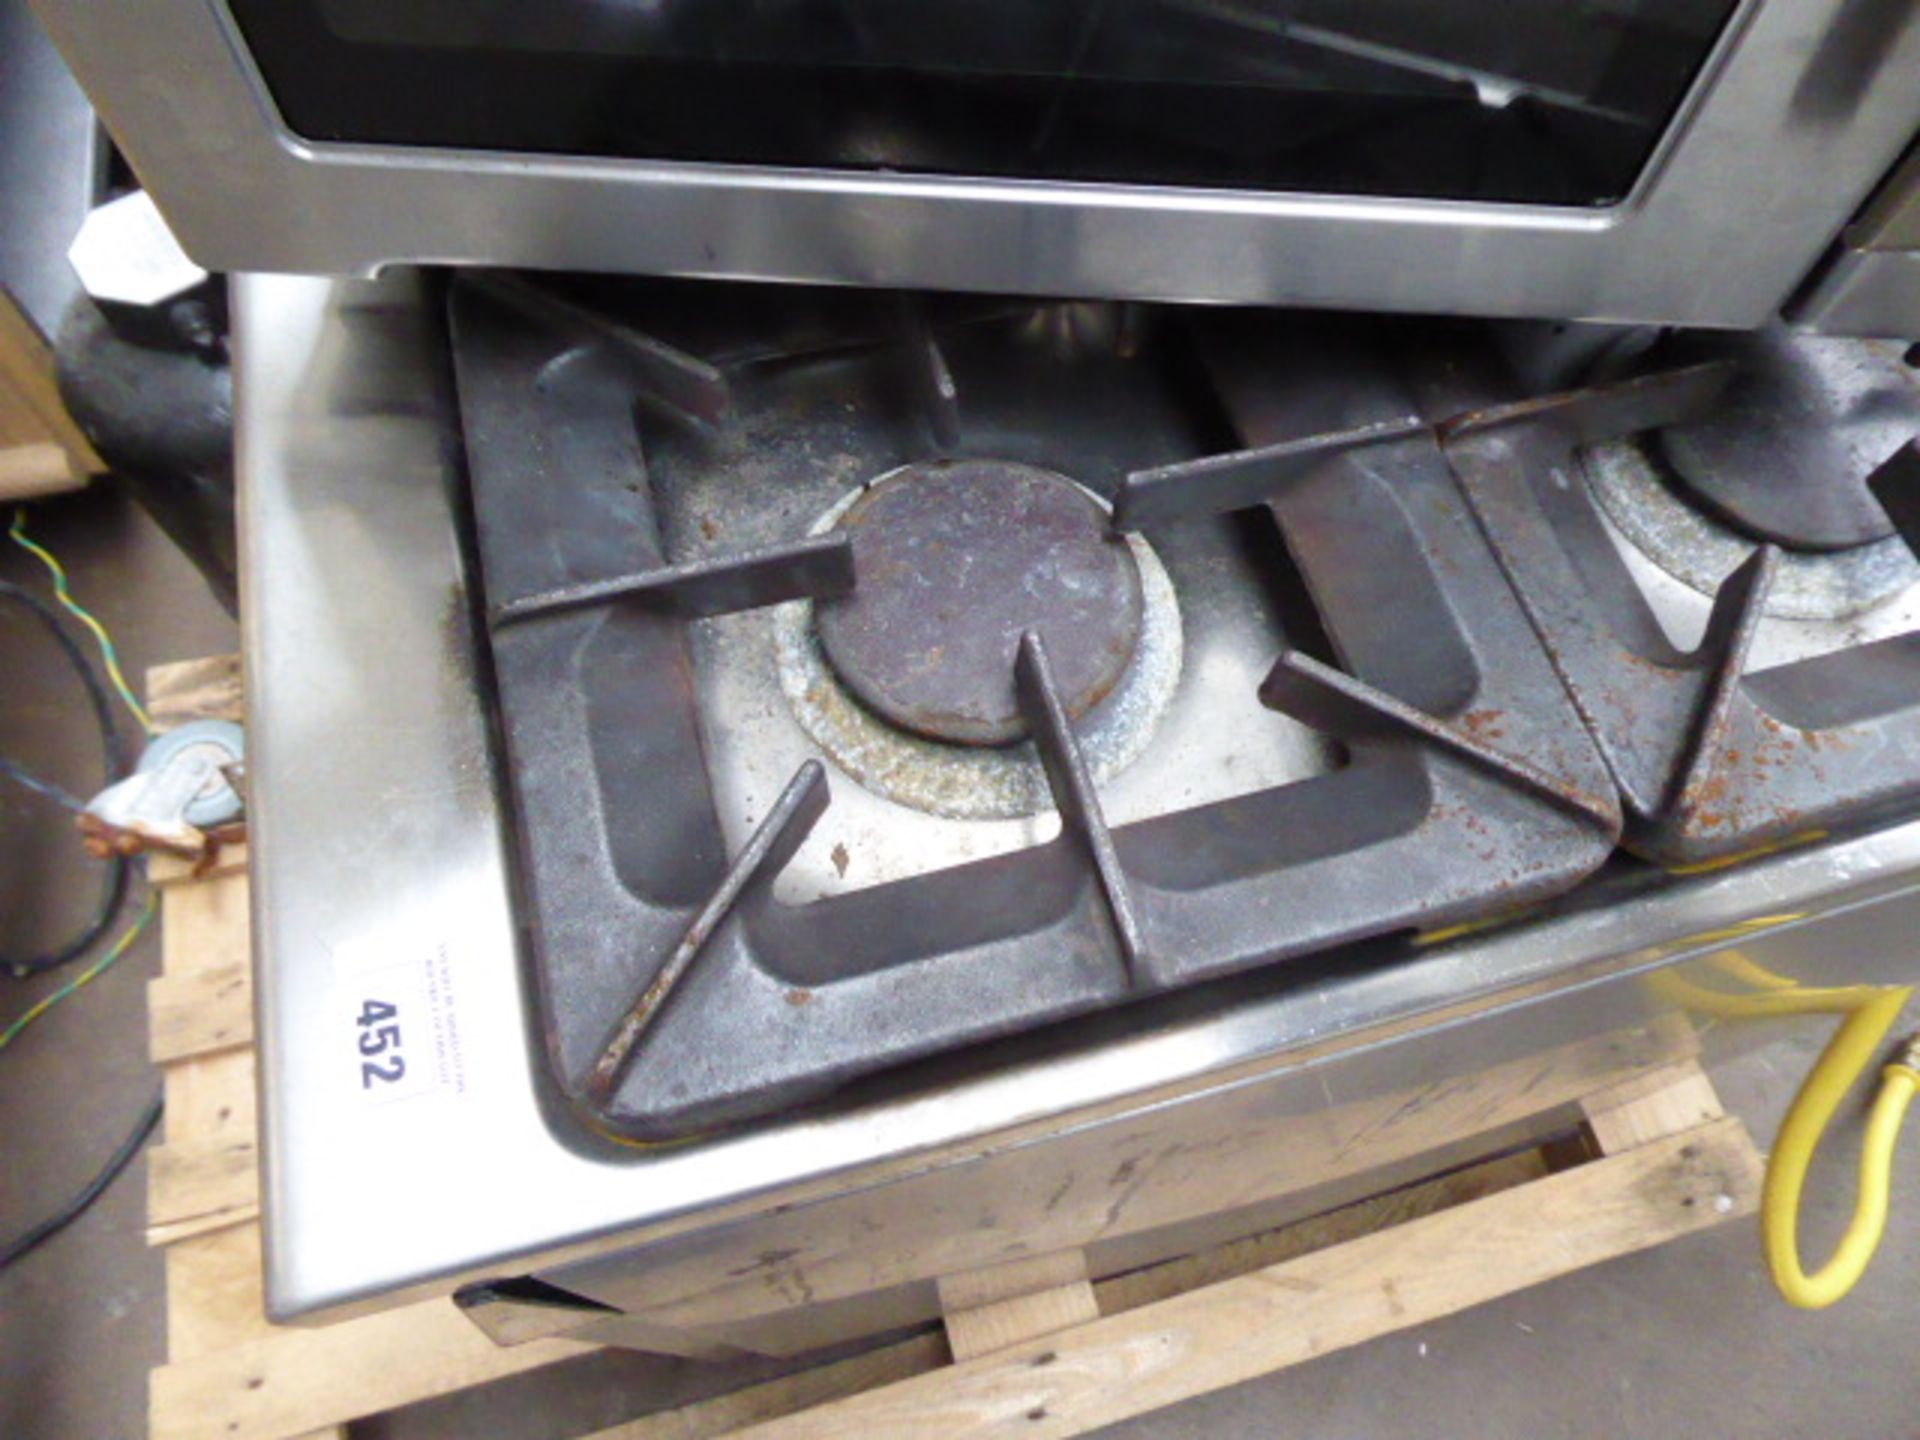 60cm gas Bartlett 4 burner cooker with single door oven under - Image 2 of 2